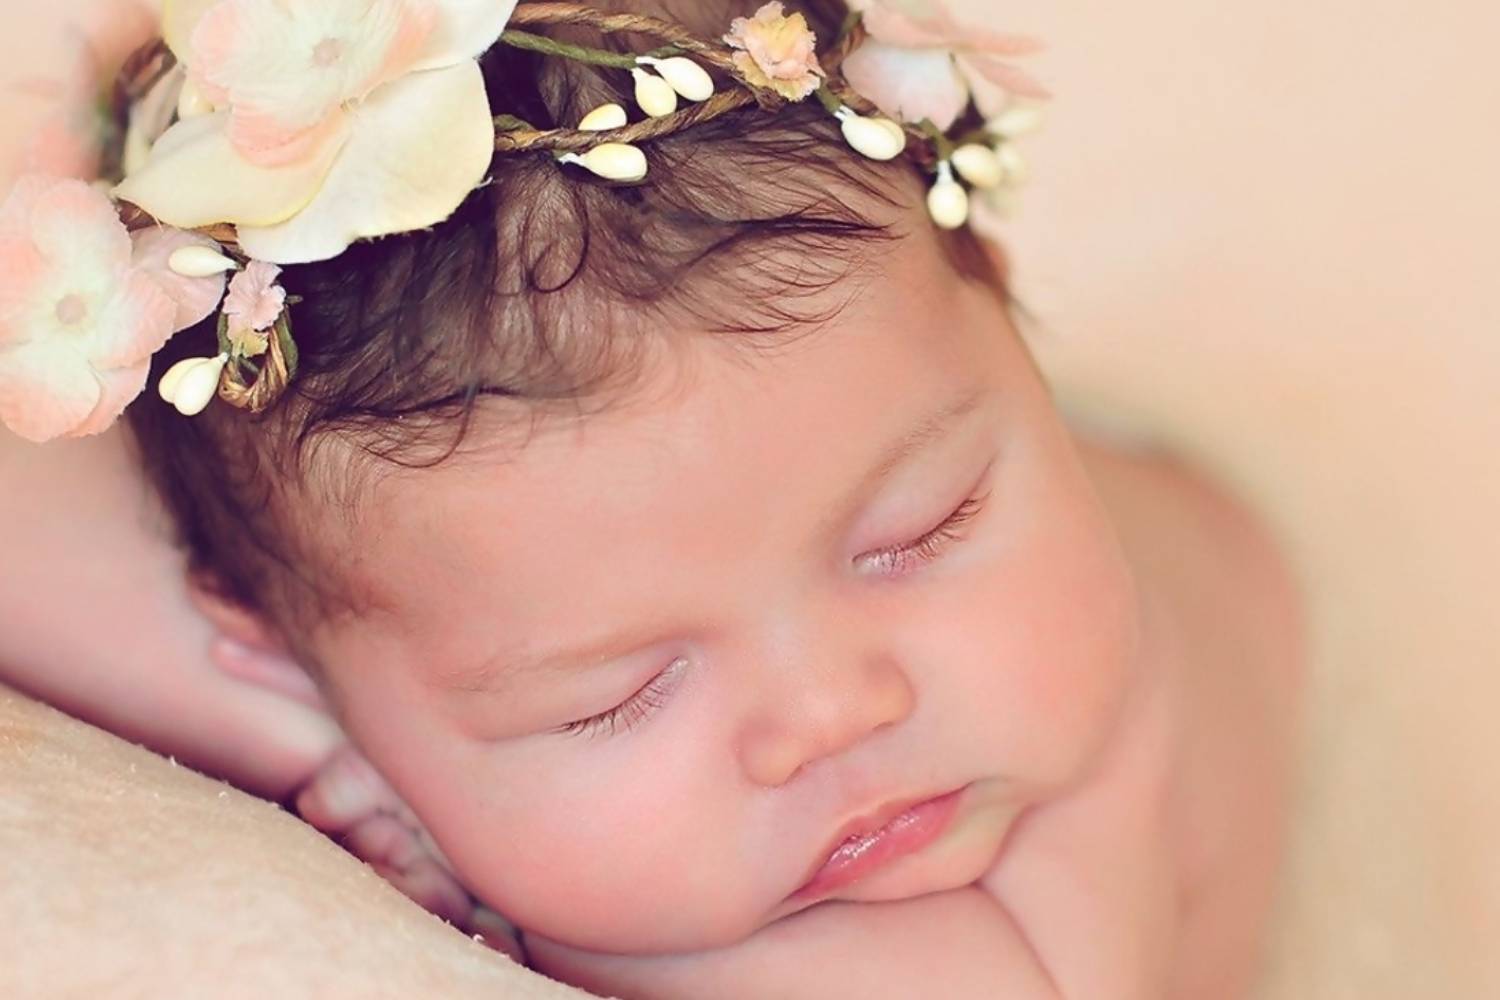 editing newborn photos in photoshop elements